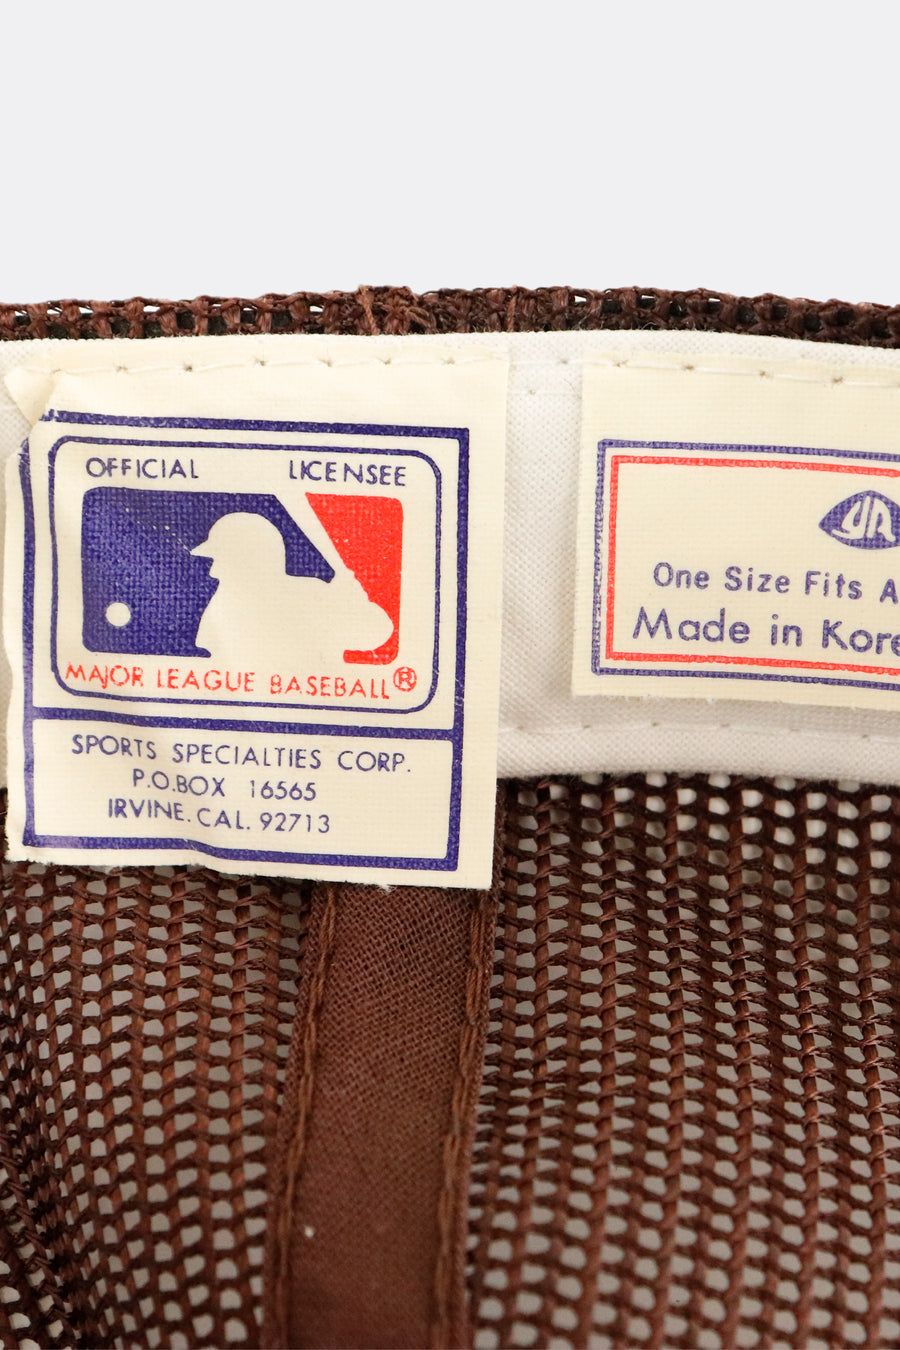 Vintage Deadstock MLB San Diego Padres Embroidered Mesh Snapback Hat